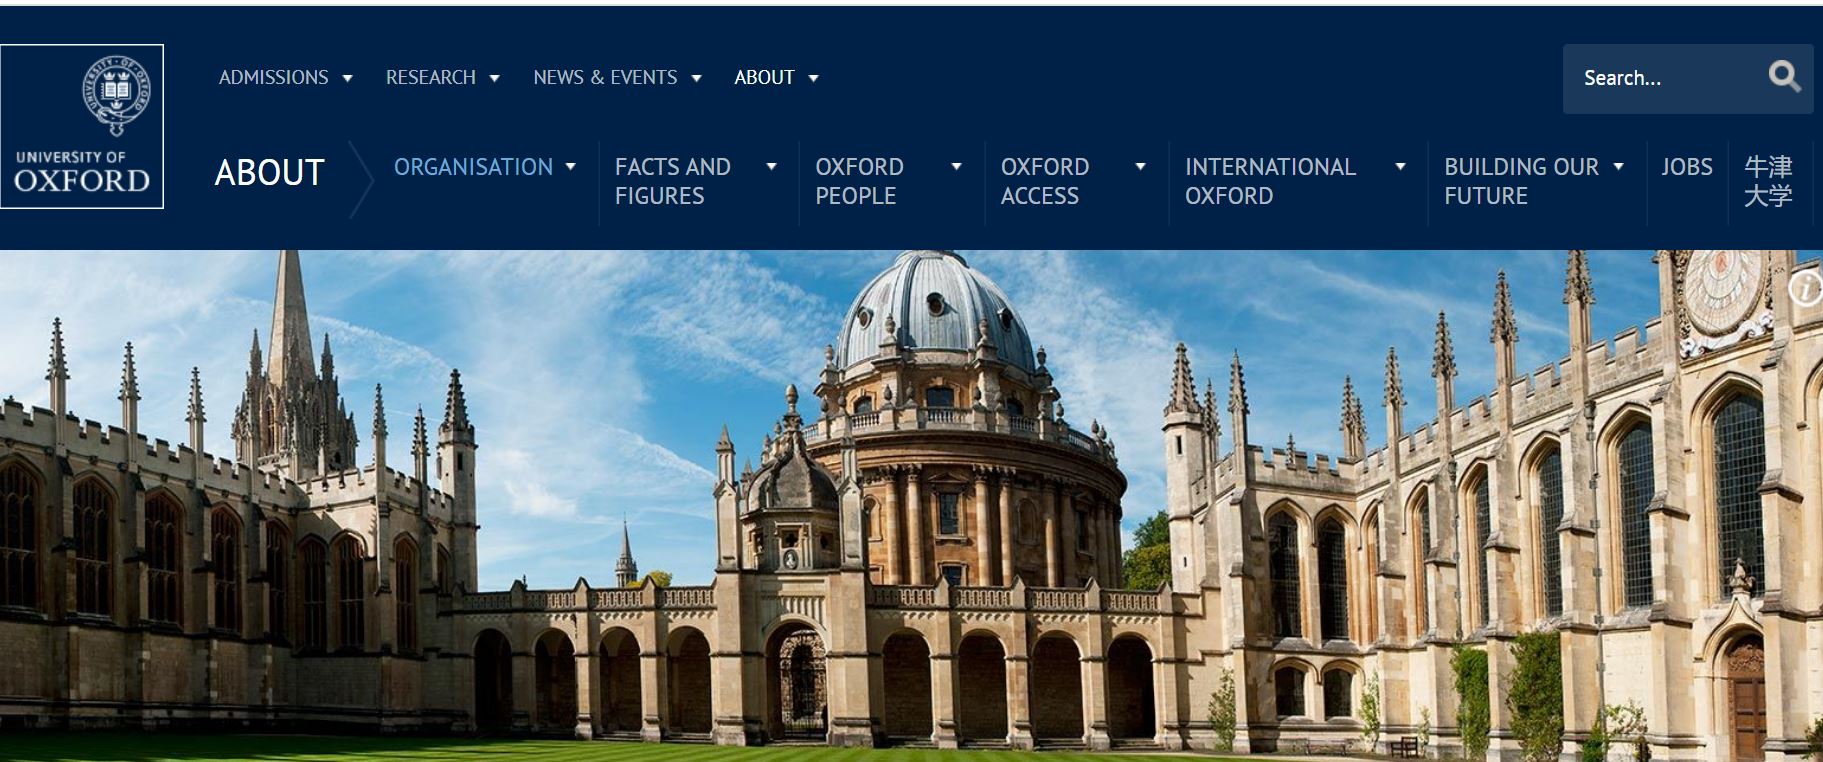 Oxford University Scholarship